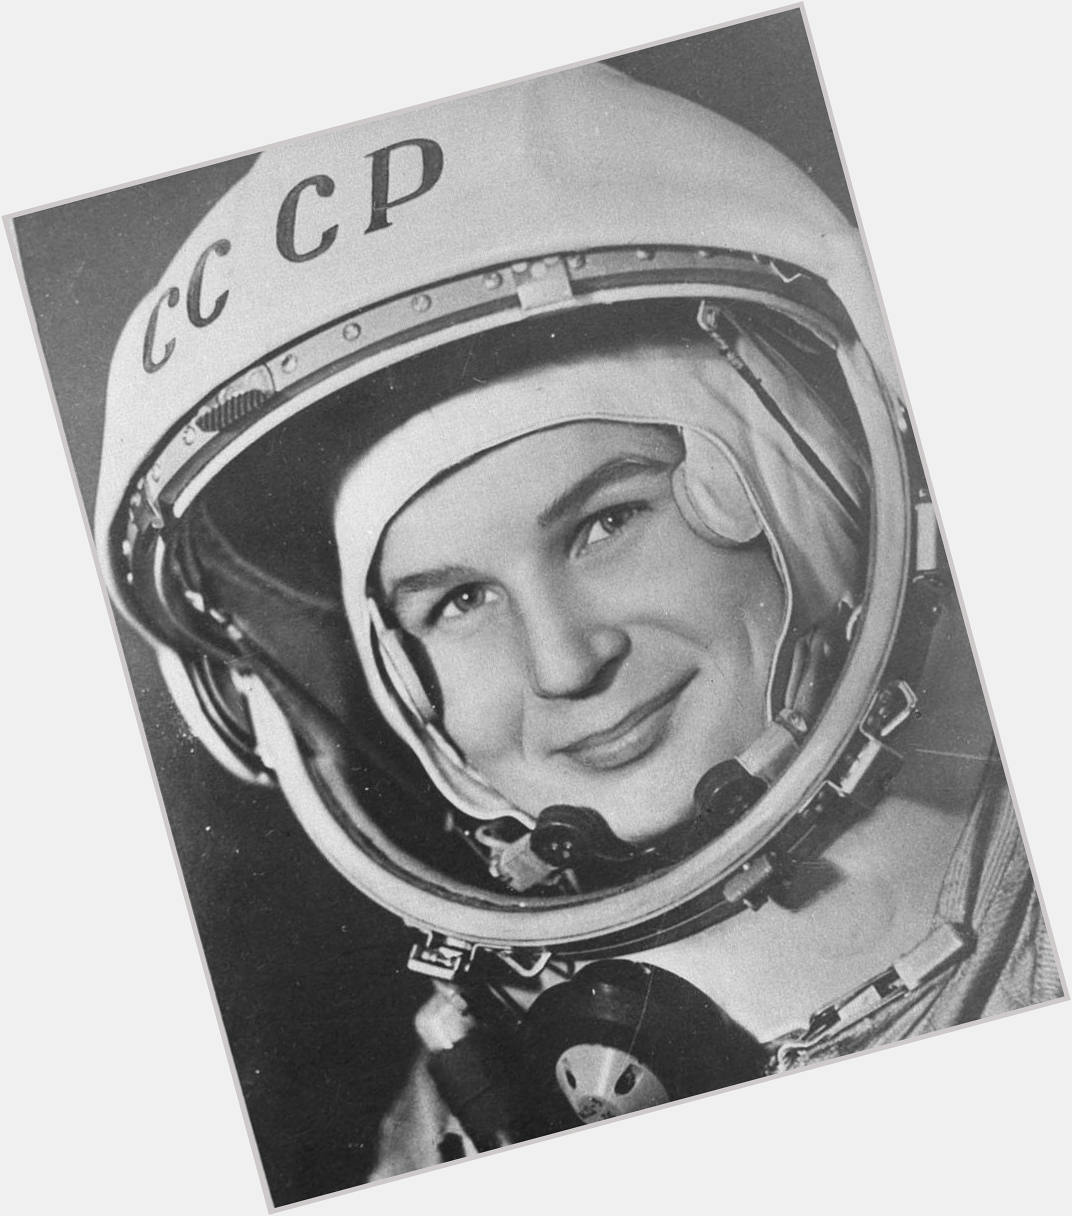 Happy 80th birthday to Russian astronaut Valentina Tereshkova, who was the first woman to 